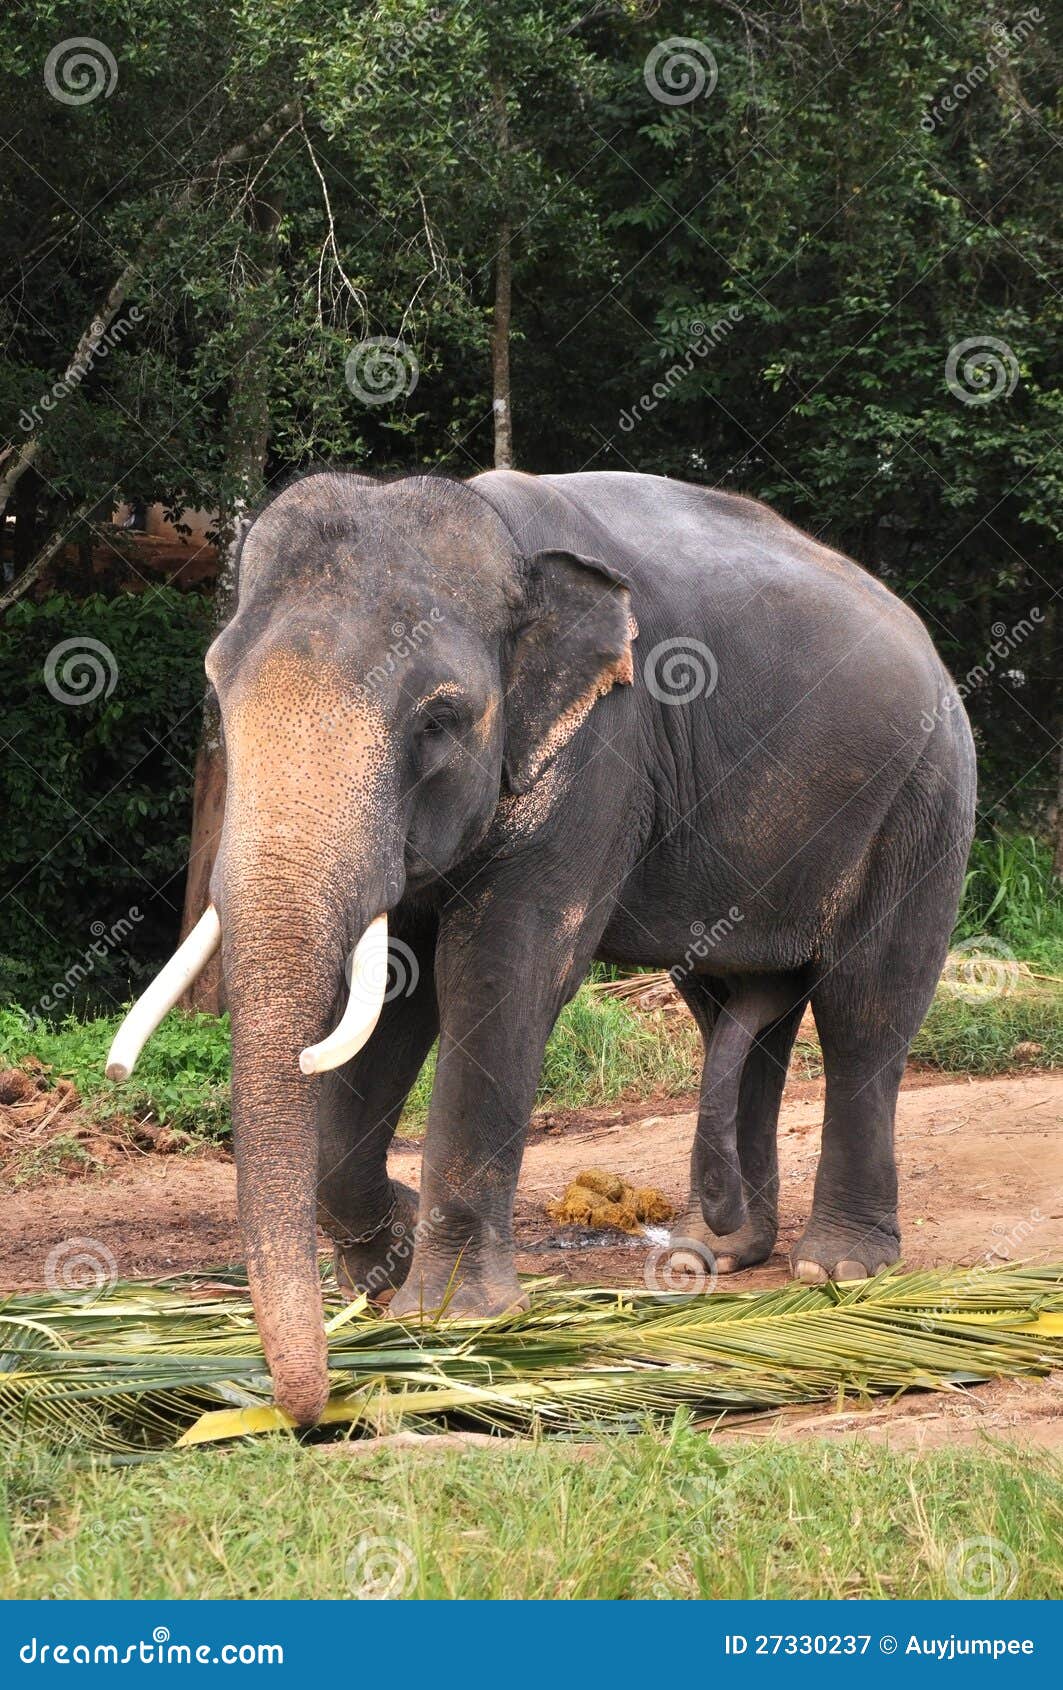 elephant with sexual desire